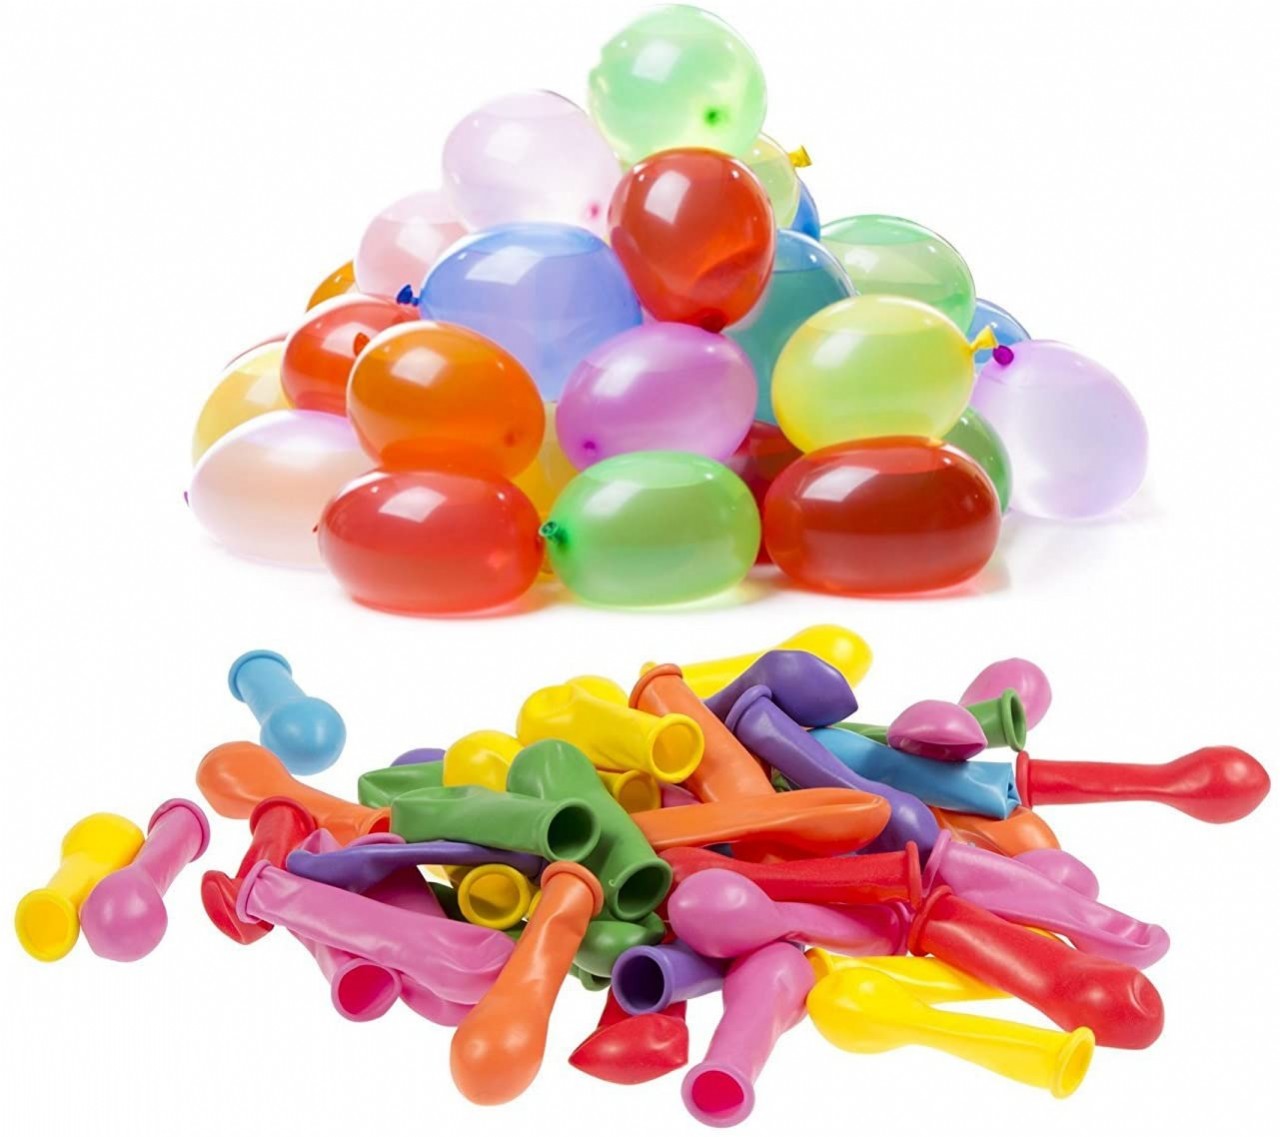 MELIP Water Balloons Quick Refill Kits 500pcs Water Bombs Balloons Bulk Fight Games Sports Summer